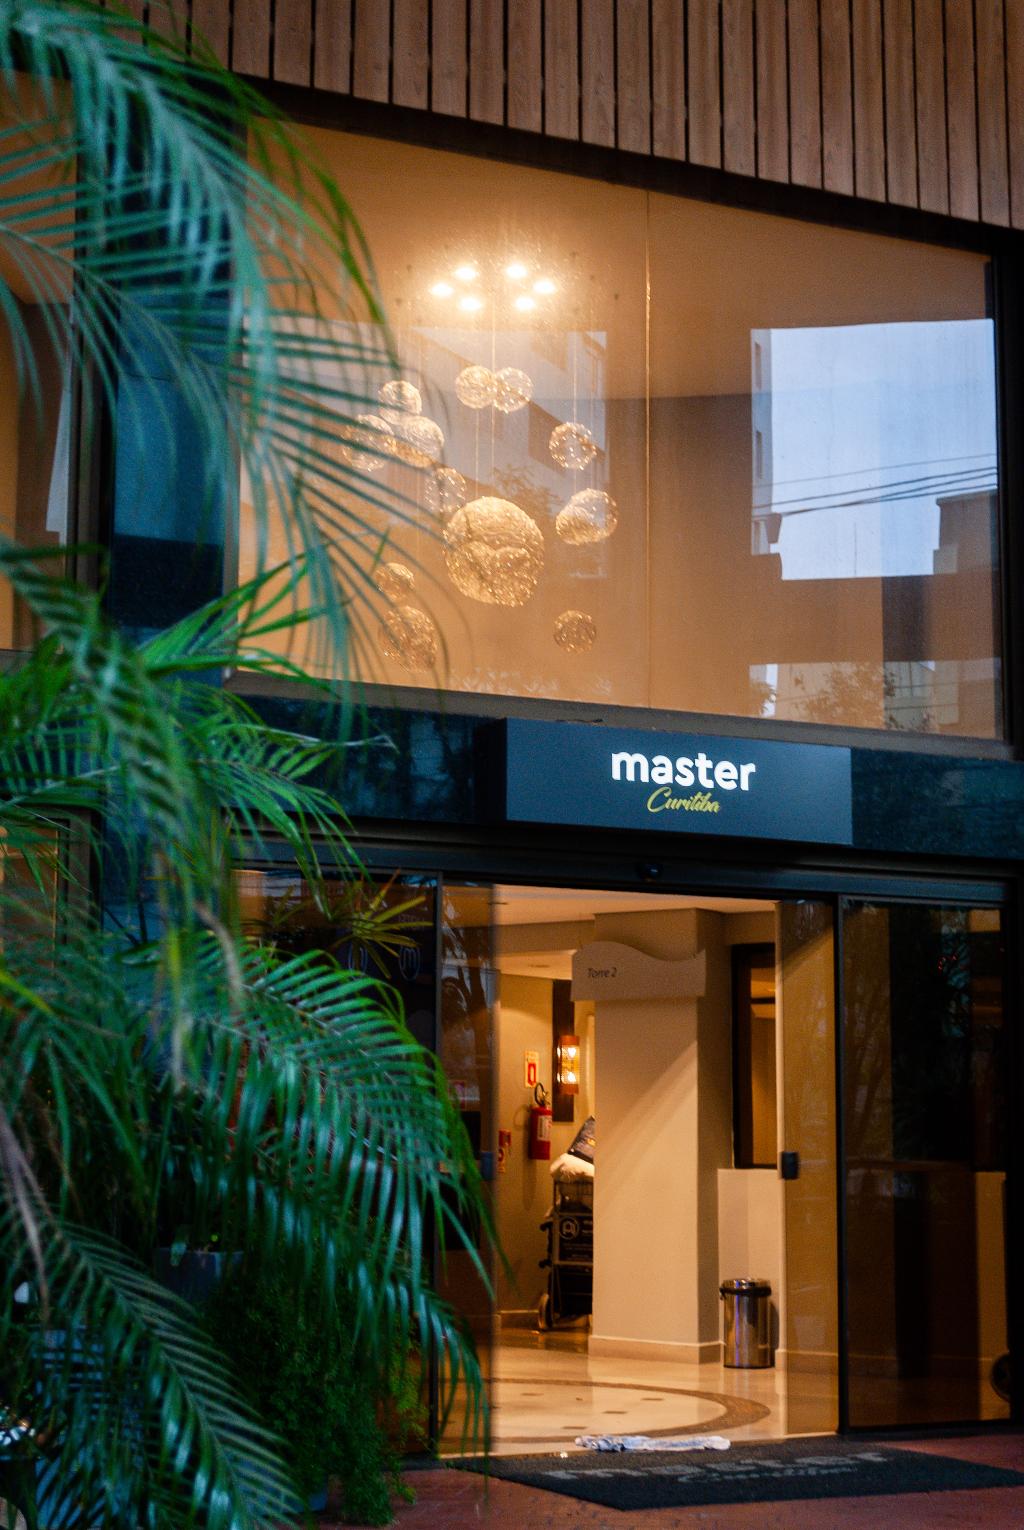 Master Curitiba